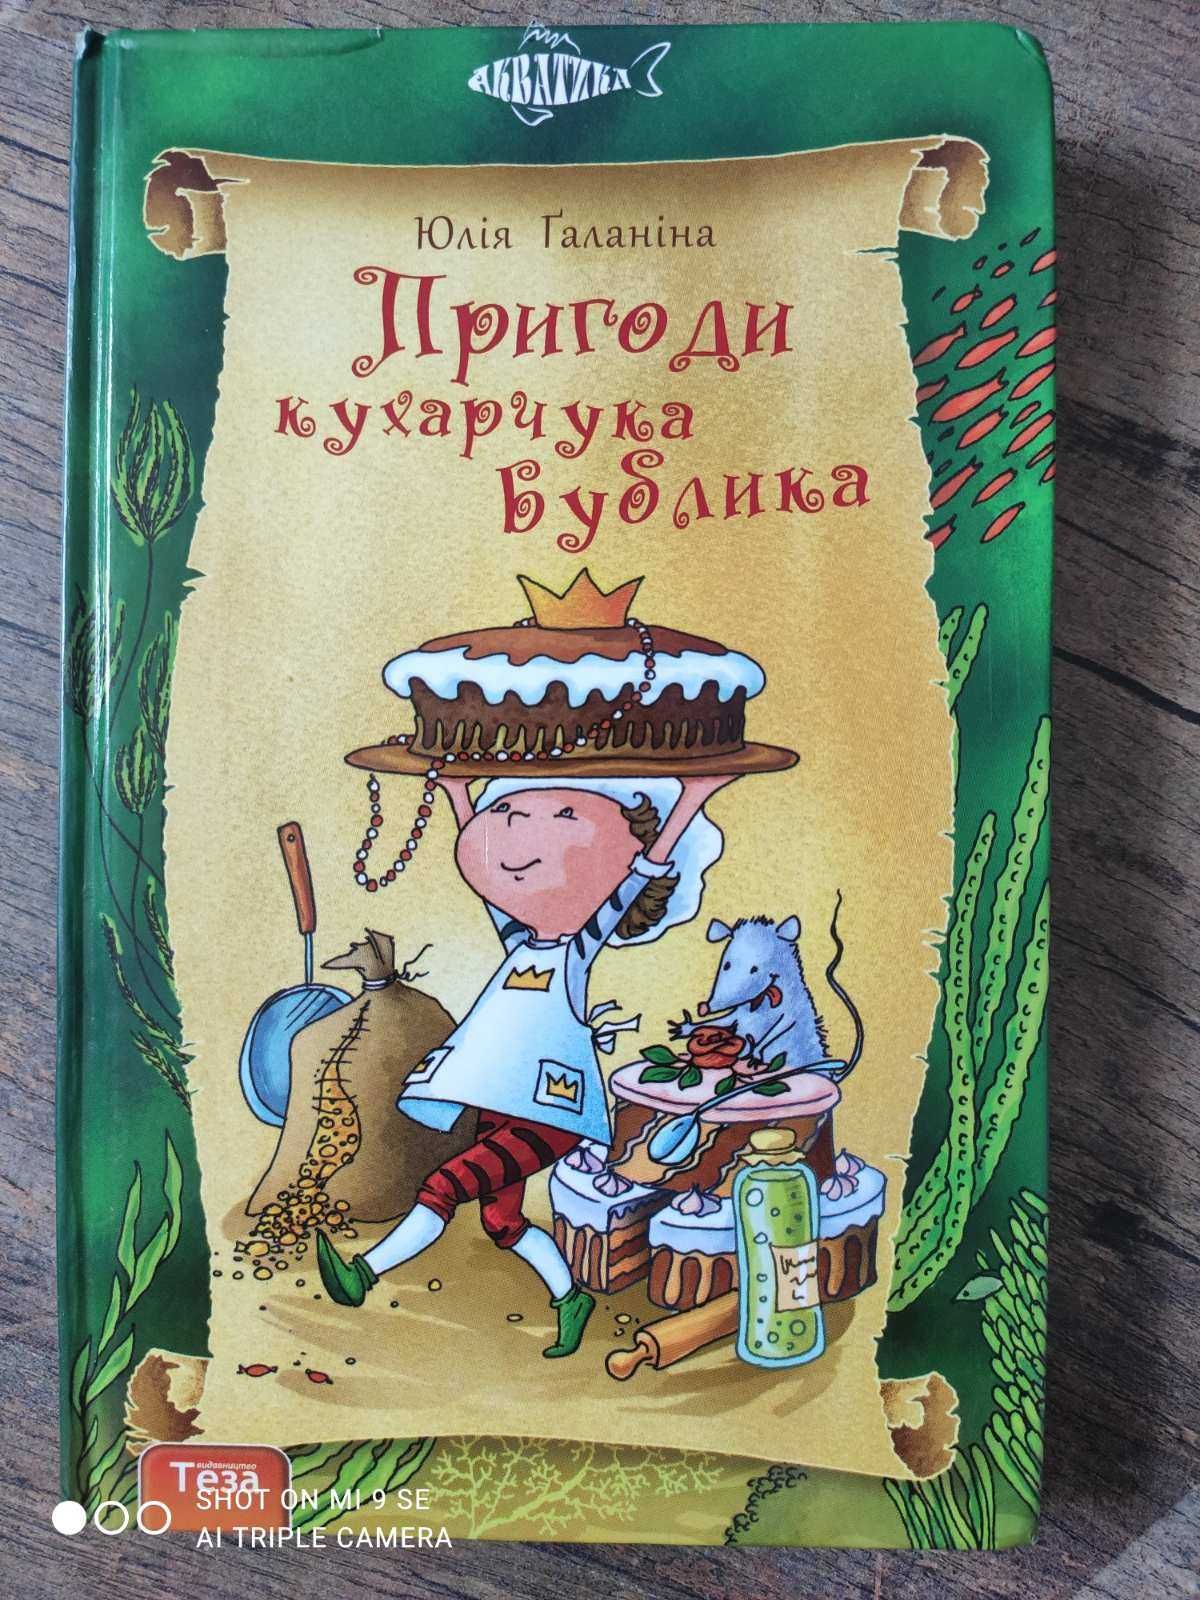 Книга "Пригоди кухарчука Бублика"